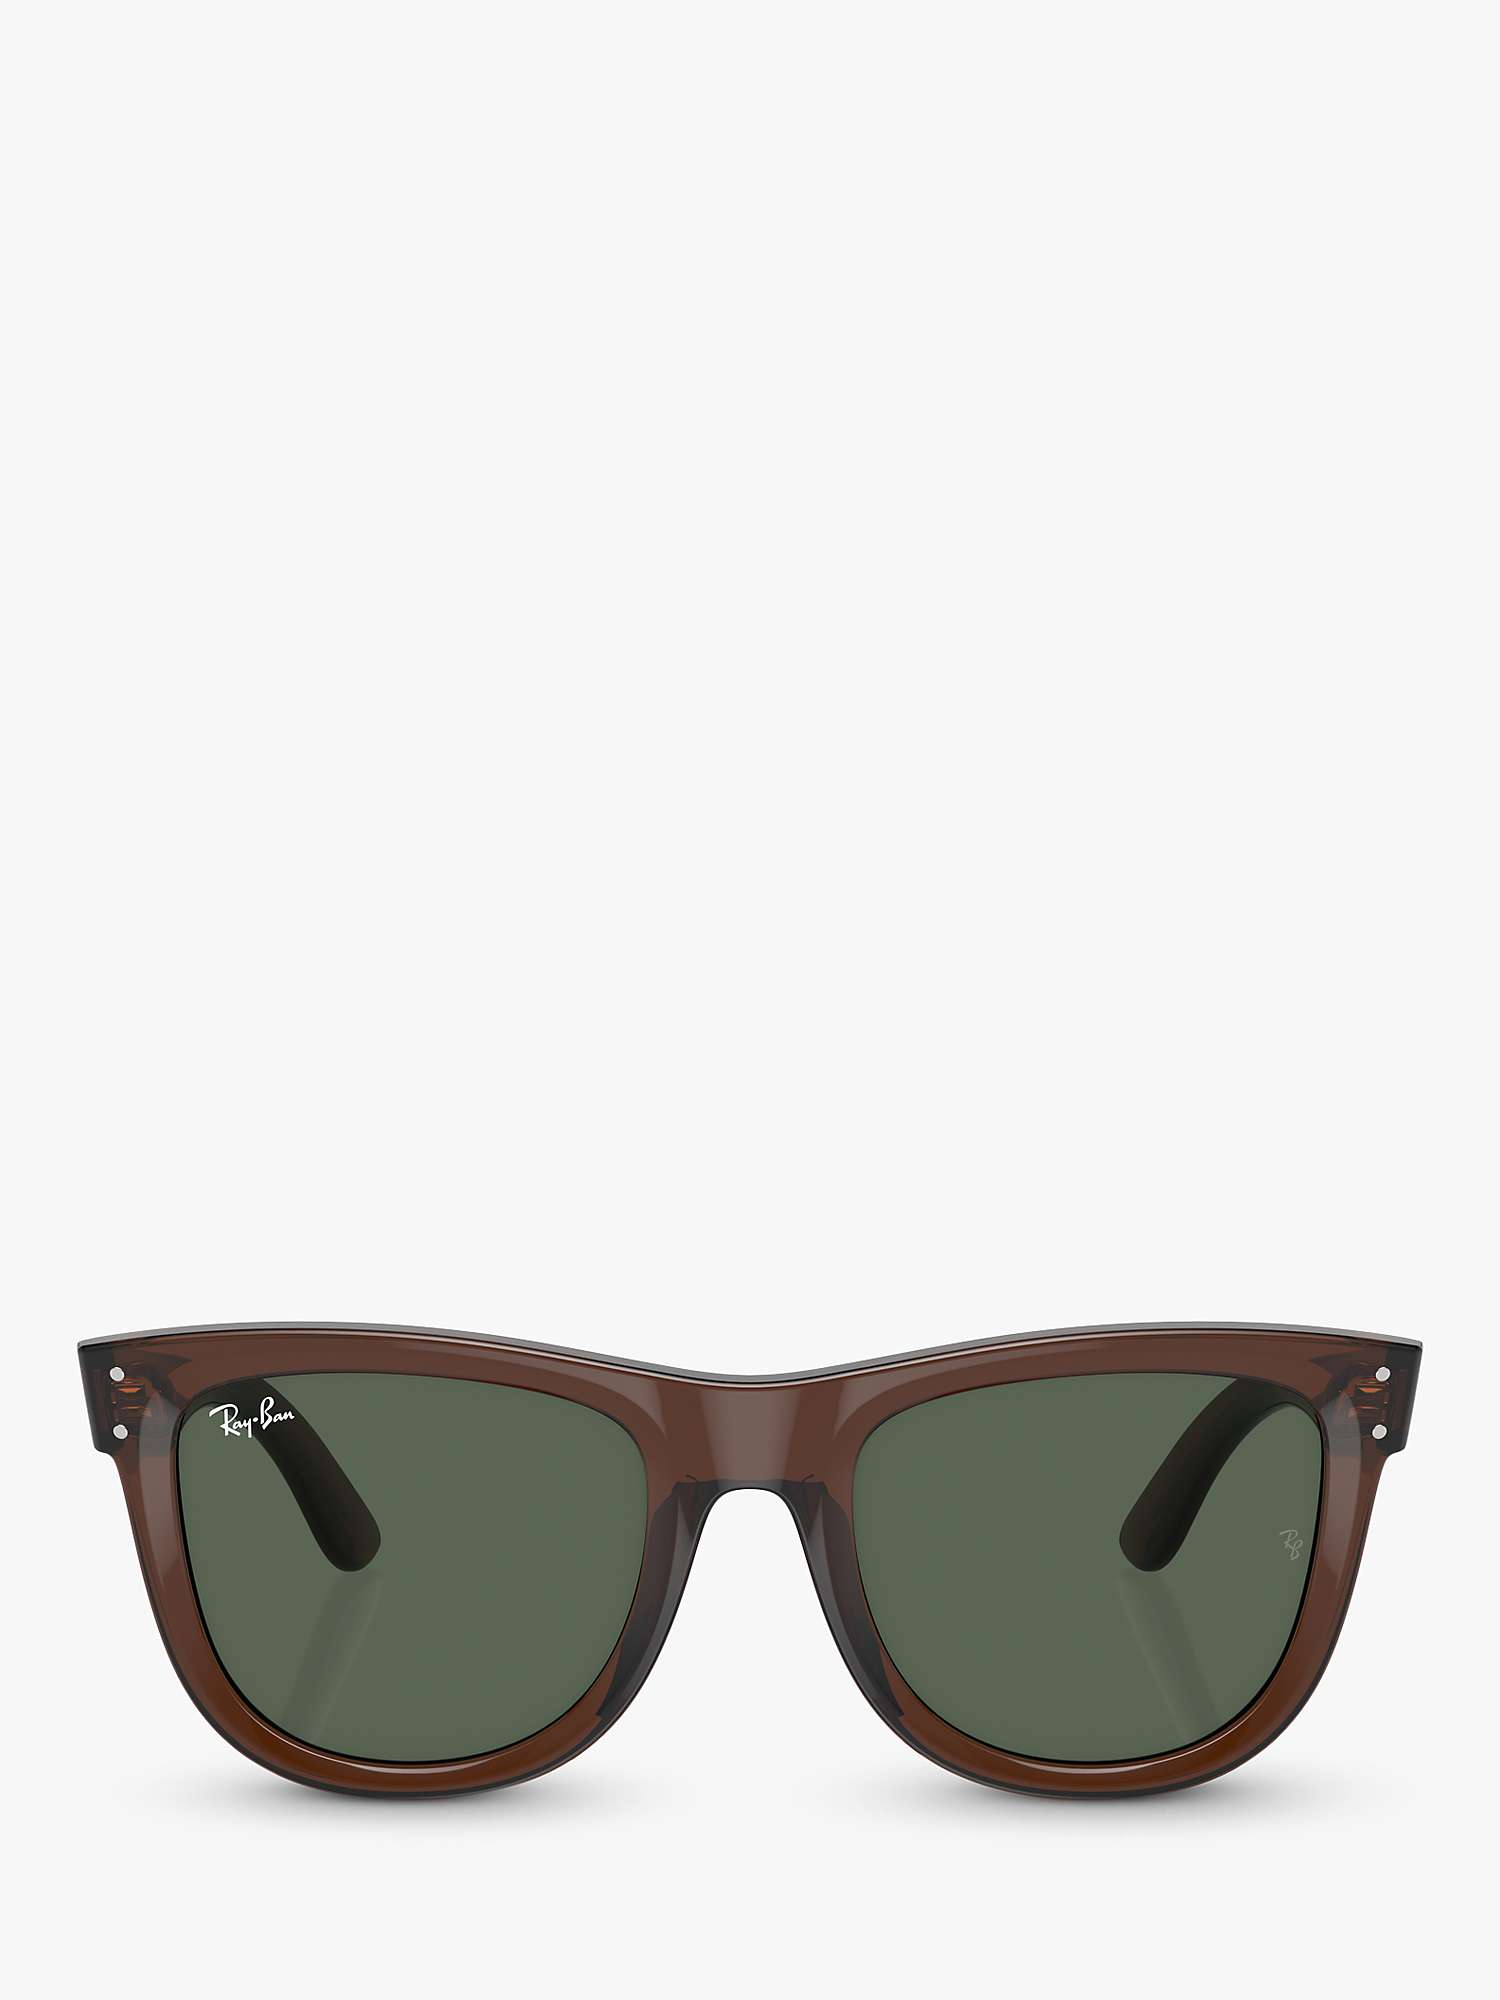 Buy Ray-Ban RBR0502S Unisex Wayfarer Reverse Sunglasses Online at johnlewis.com